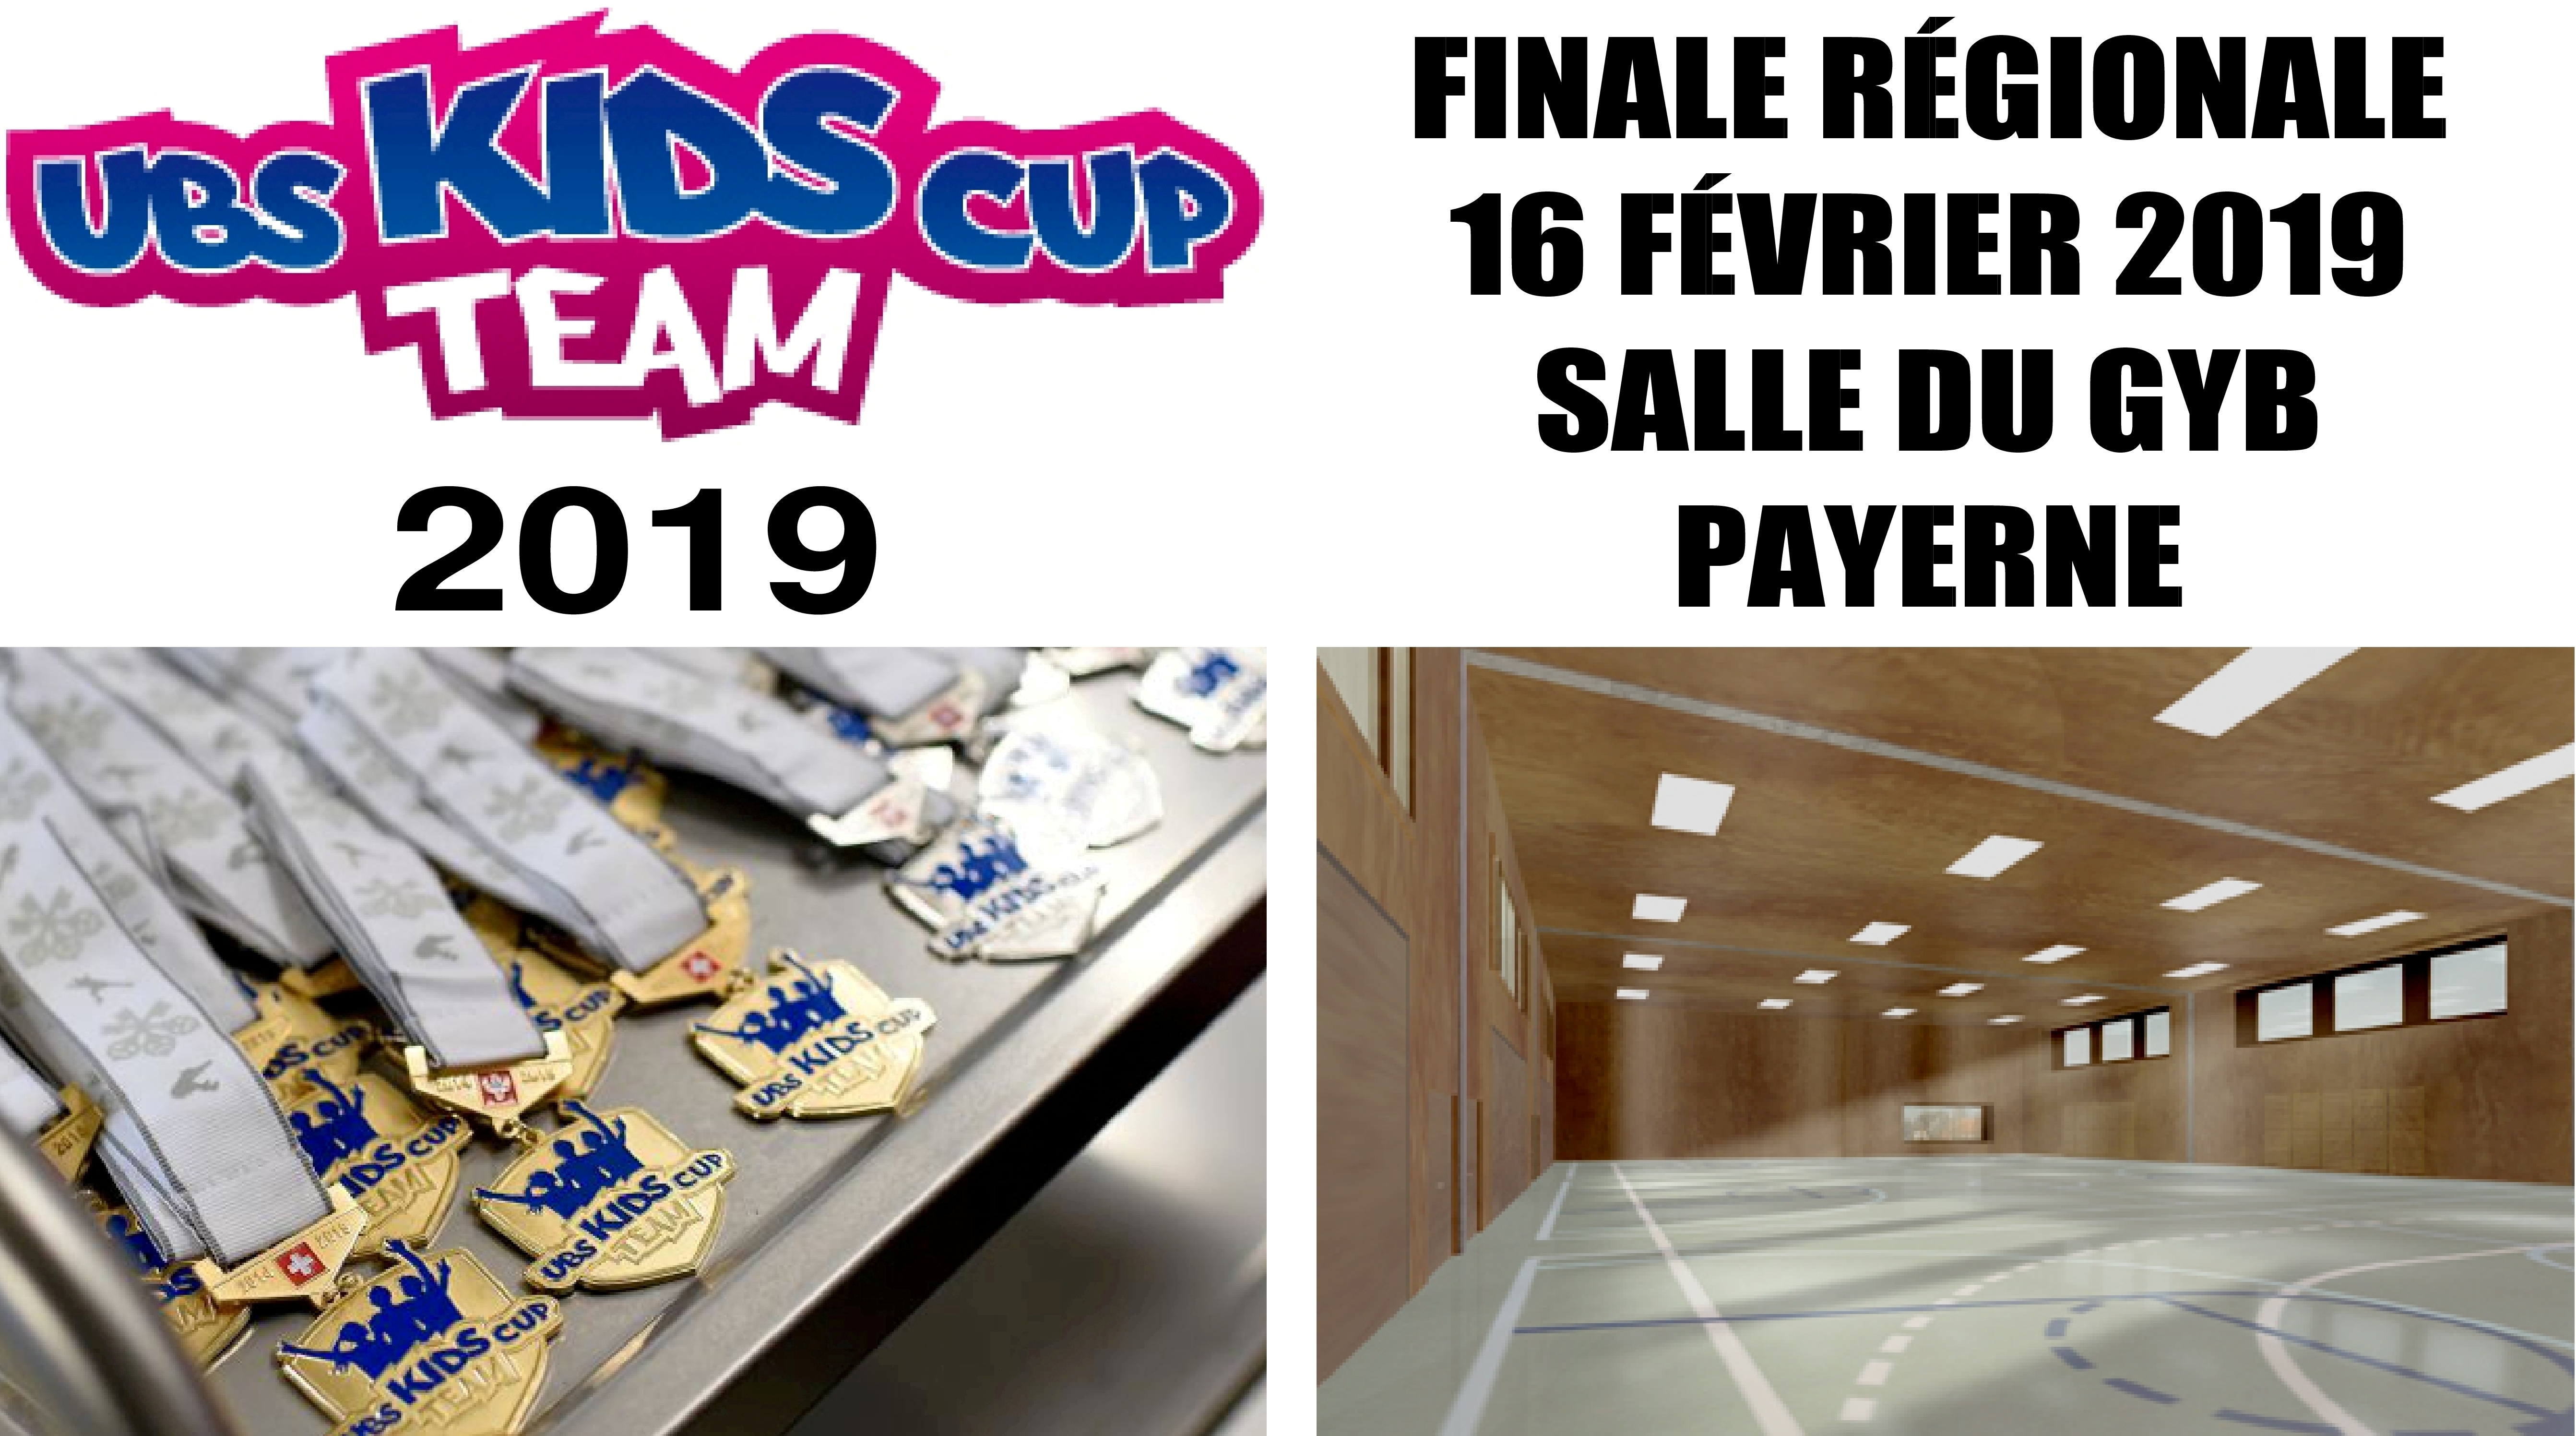 UBS Kids Cup Team à Payerne